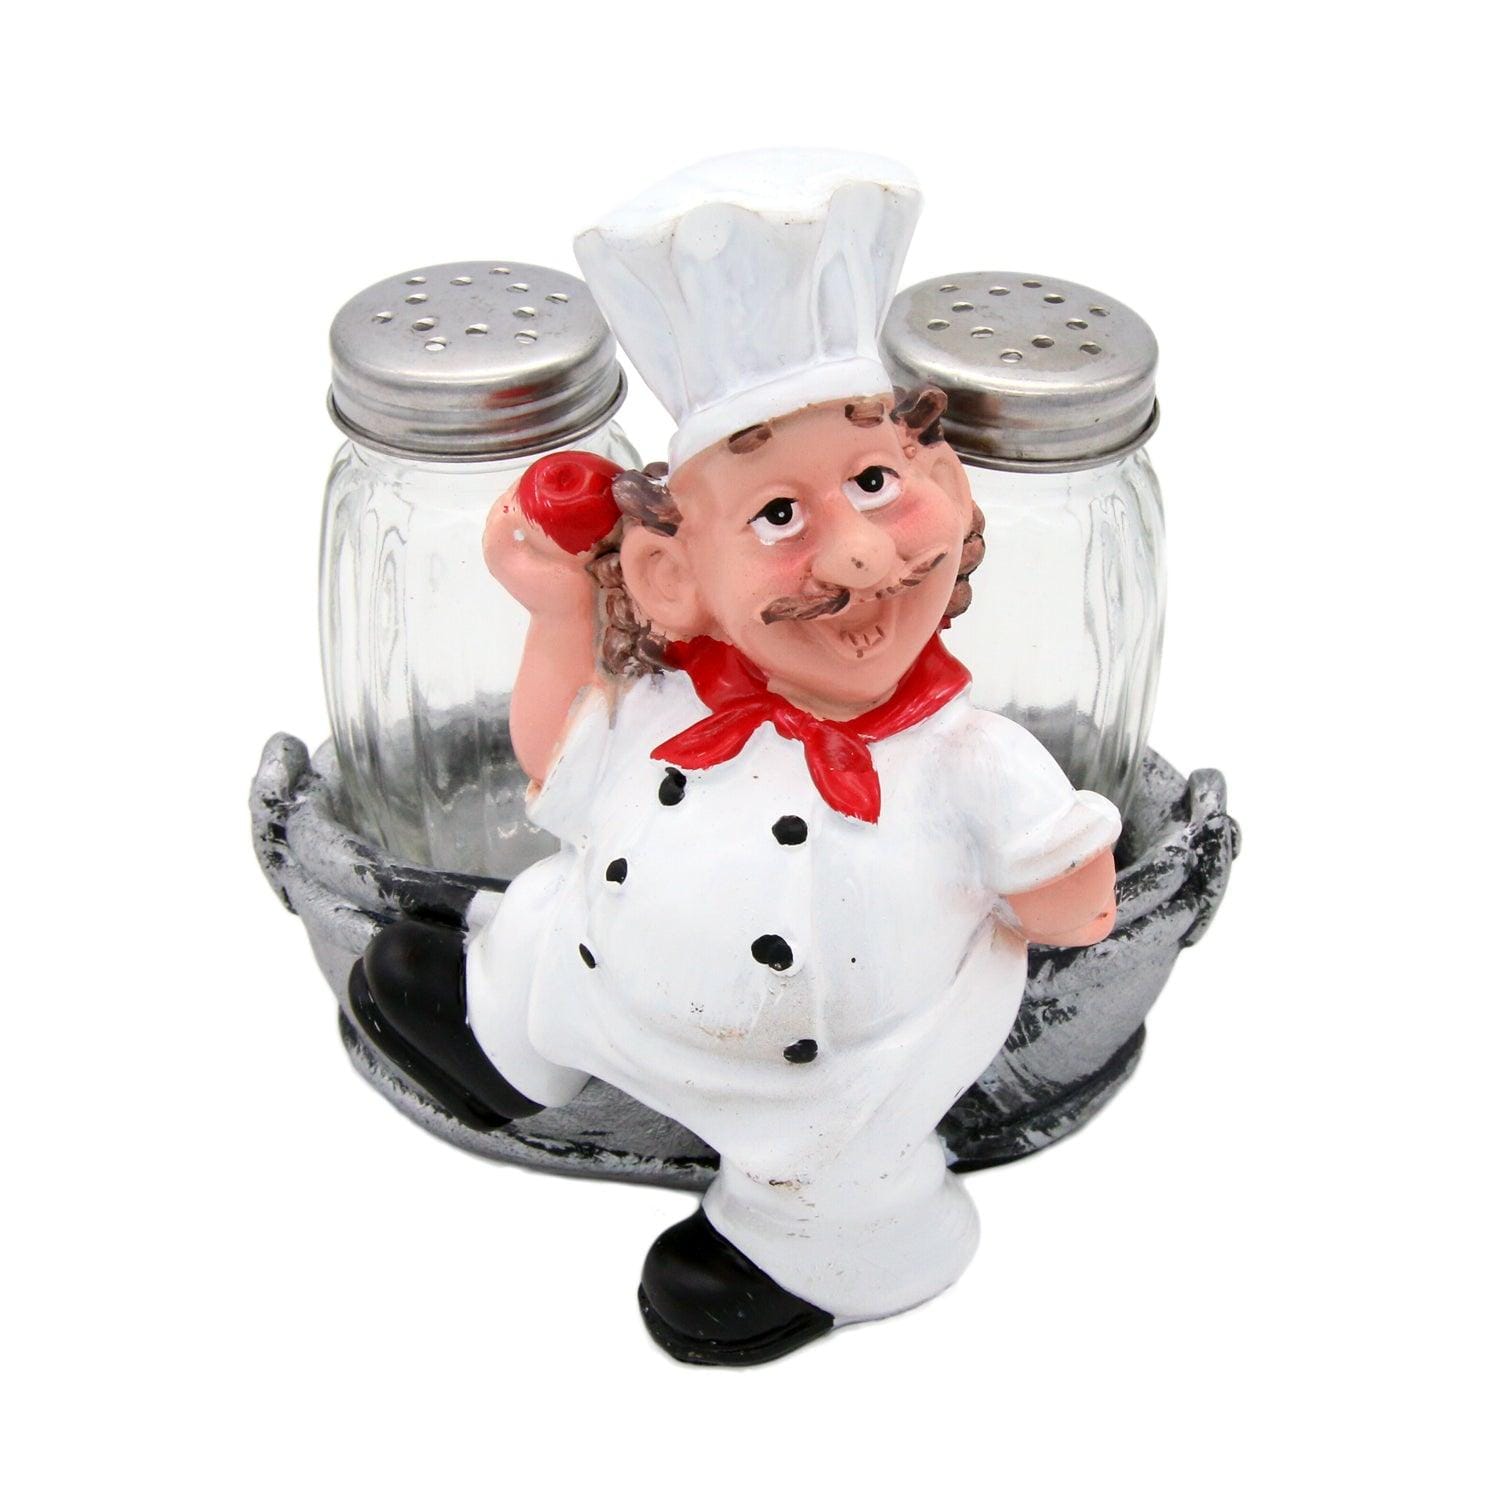 Foodie Chef Figurine Resin Salt & Pepper Shakers in Silver Basket Holder Set